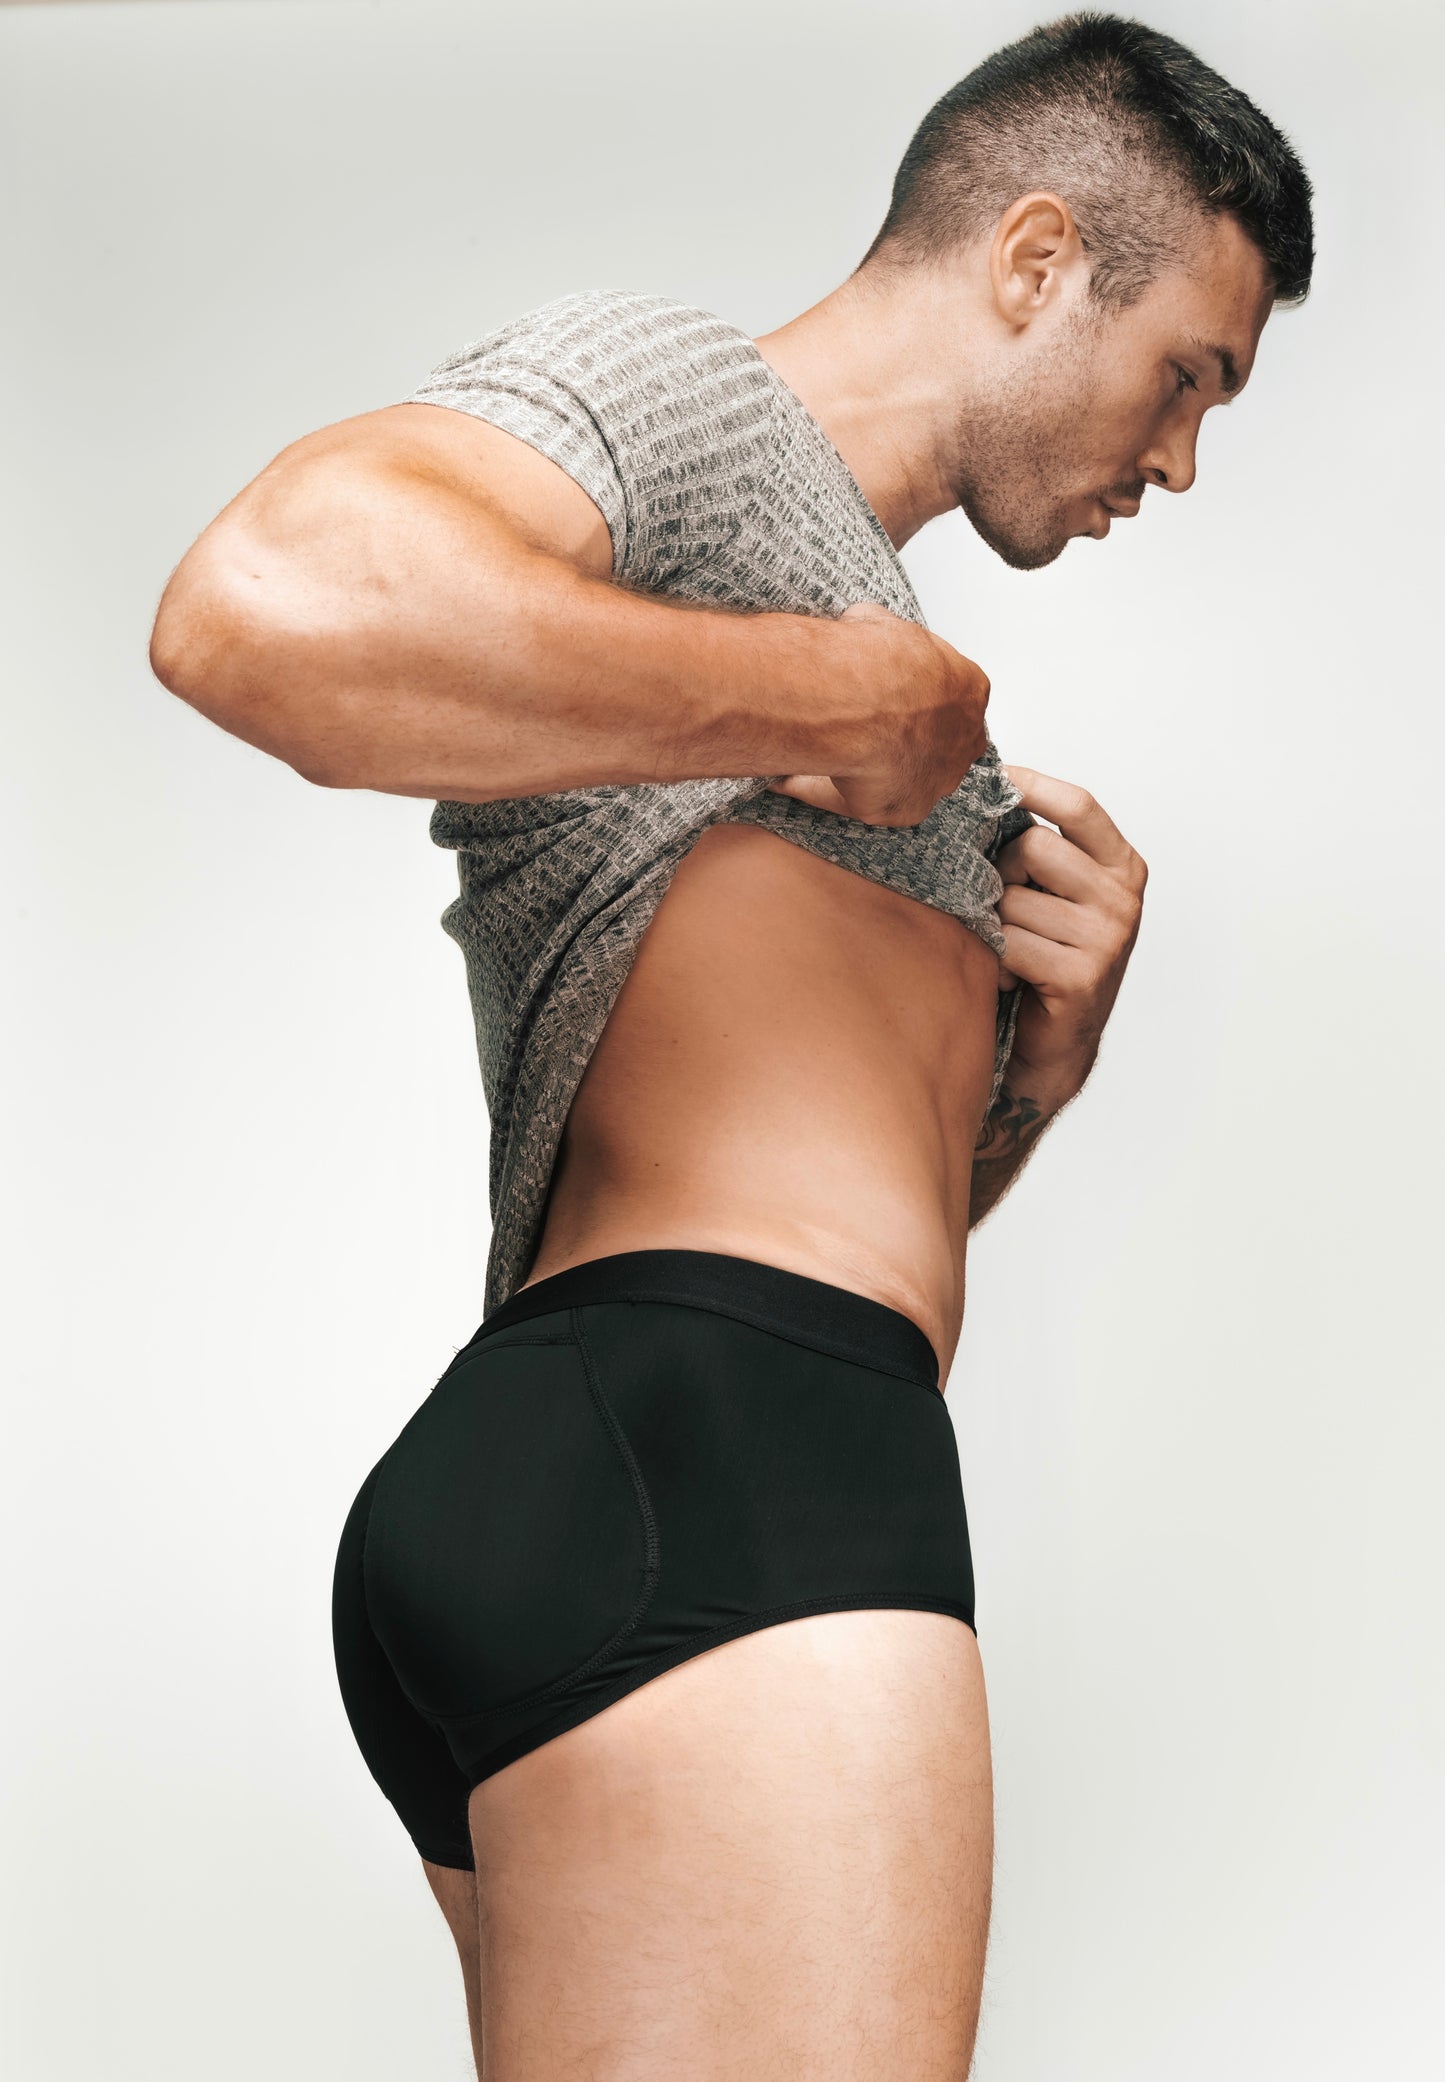 Briefs Combo: Underwear & Silicone Pads